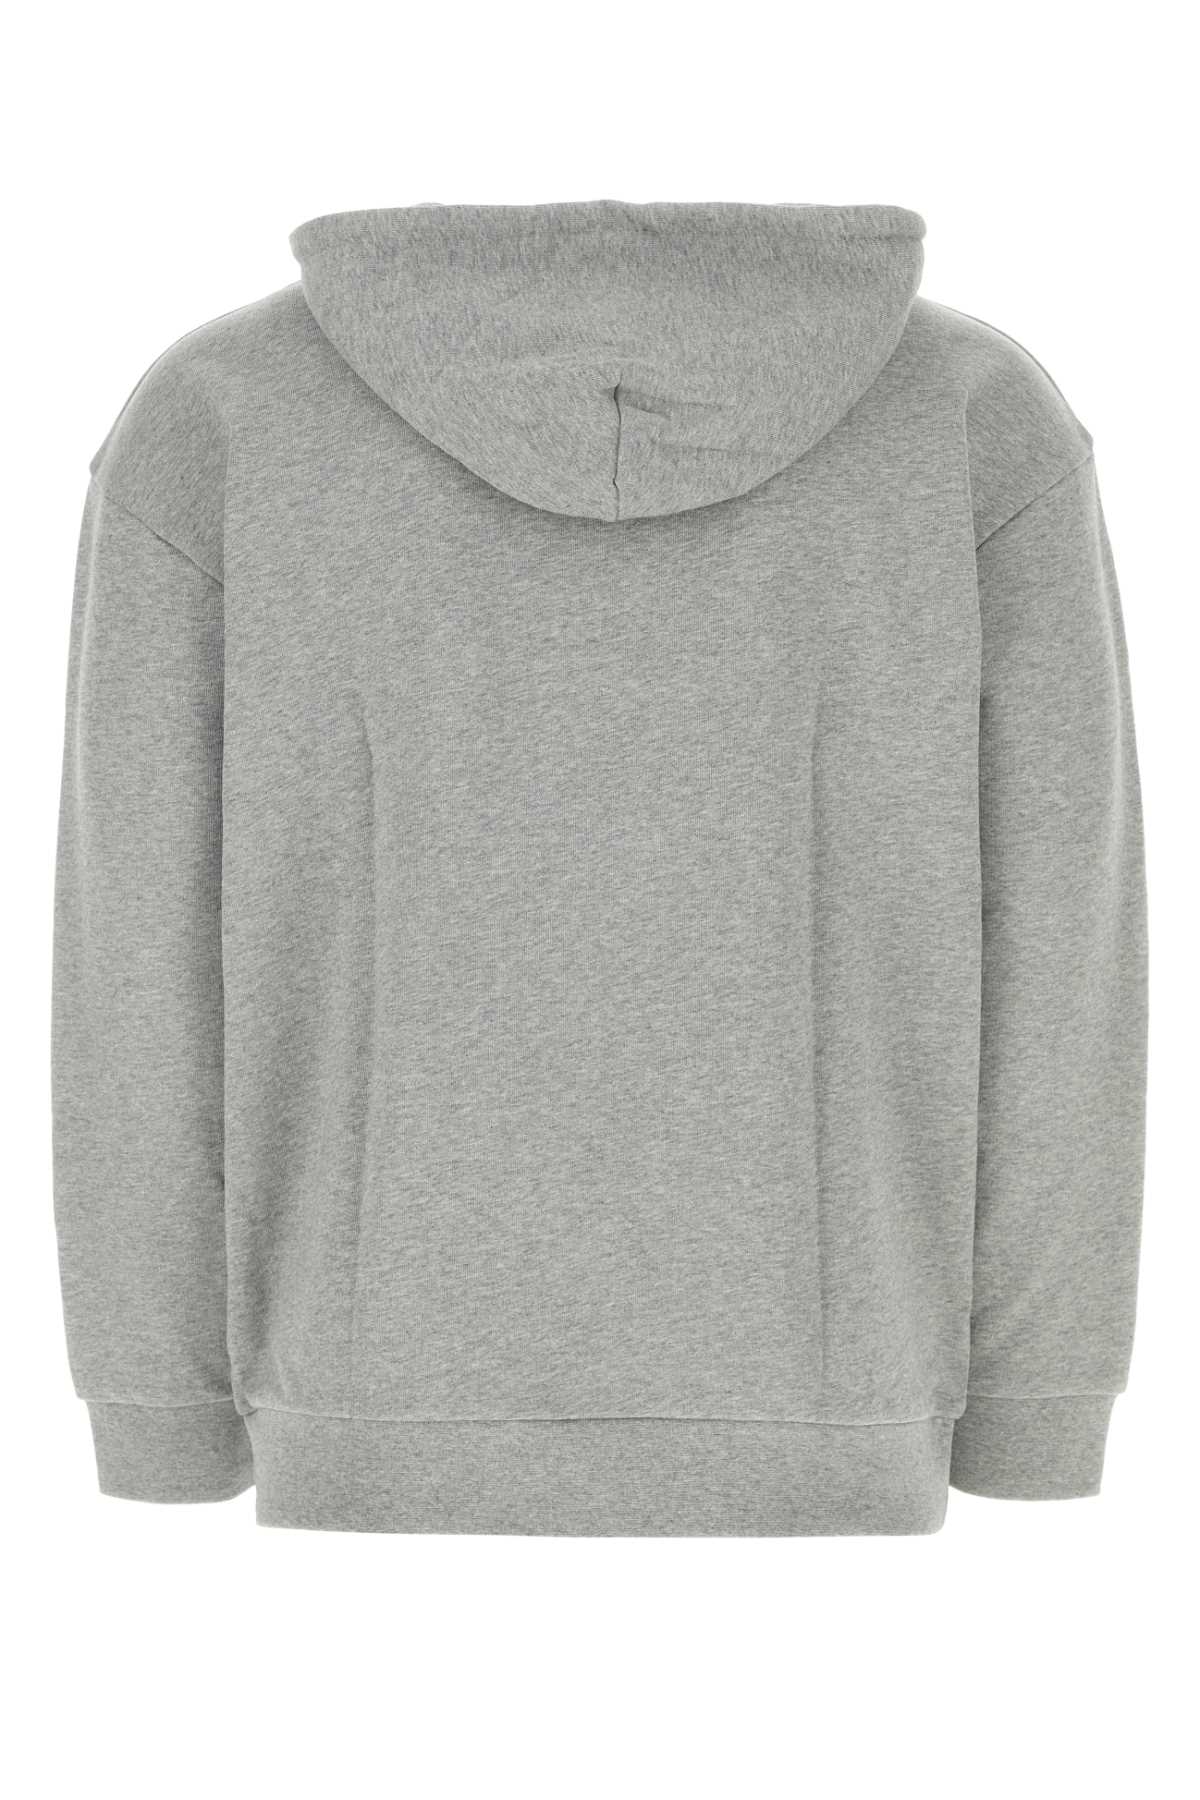 Apc Grey Cotton Milo Sweatshirt In Grisclairchine